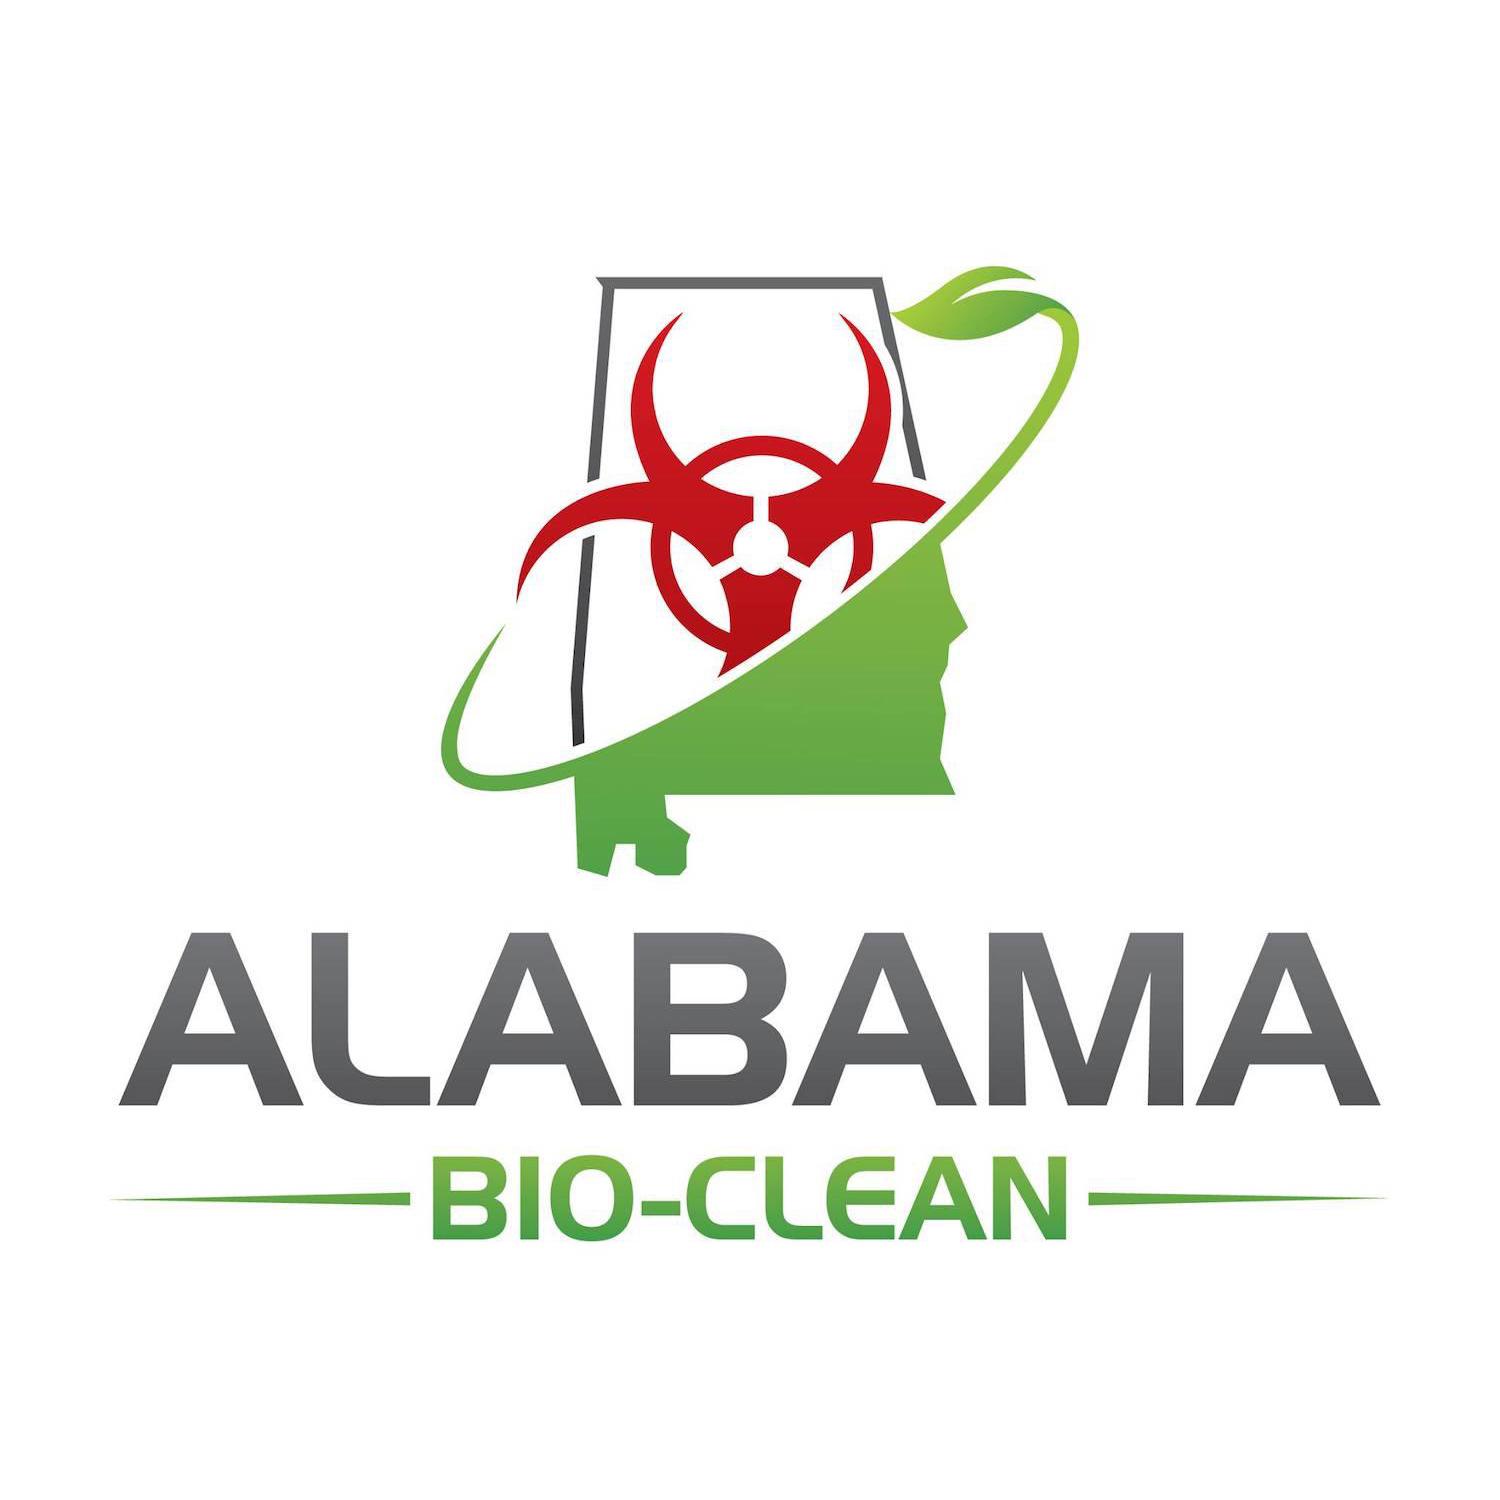 Alabama Bio-Clean, Inc.